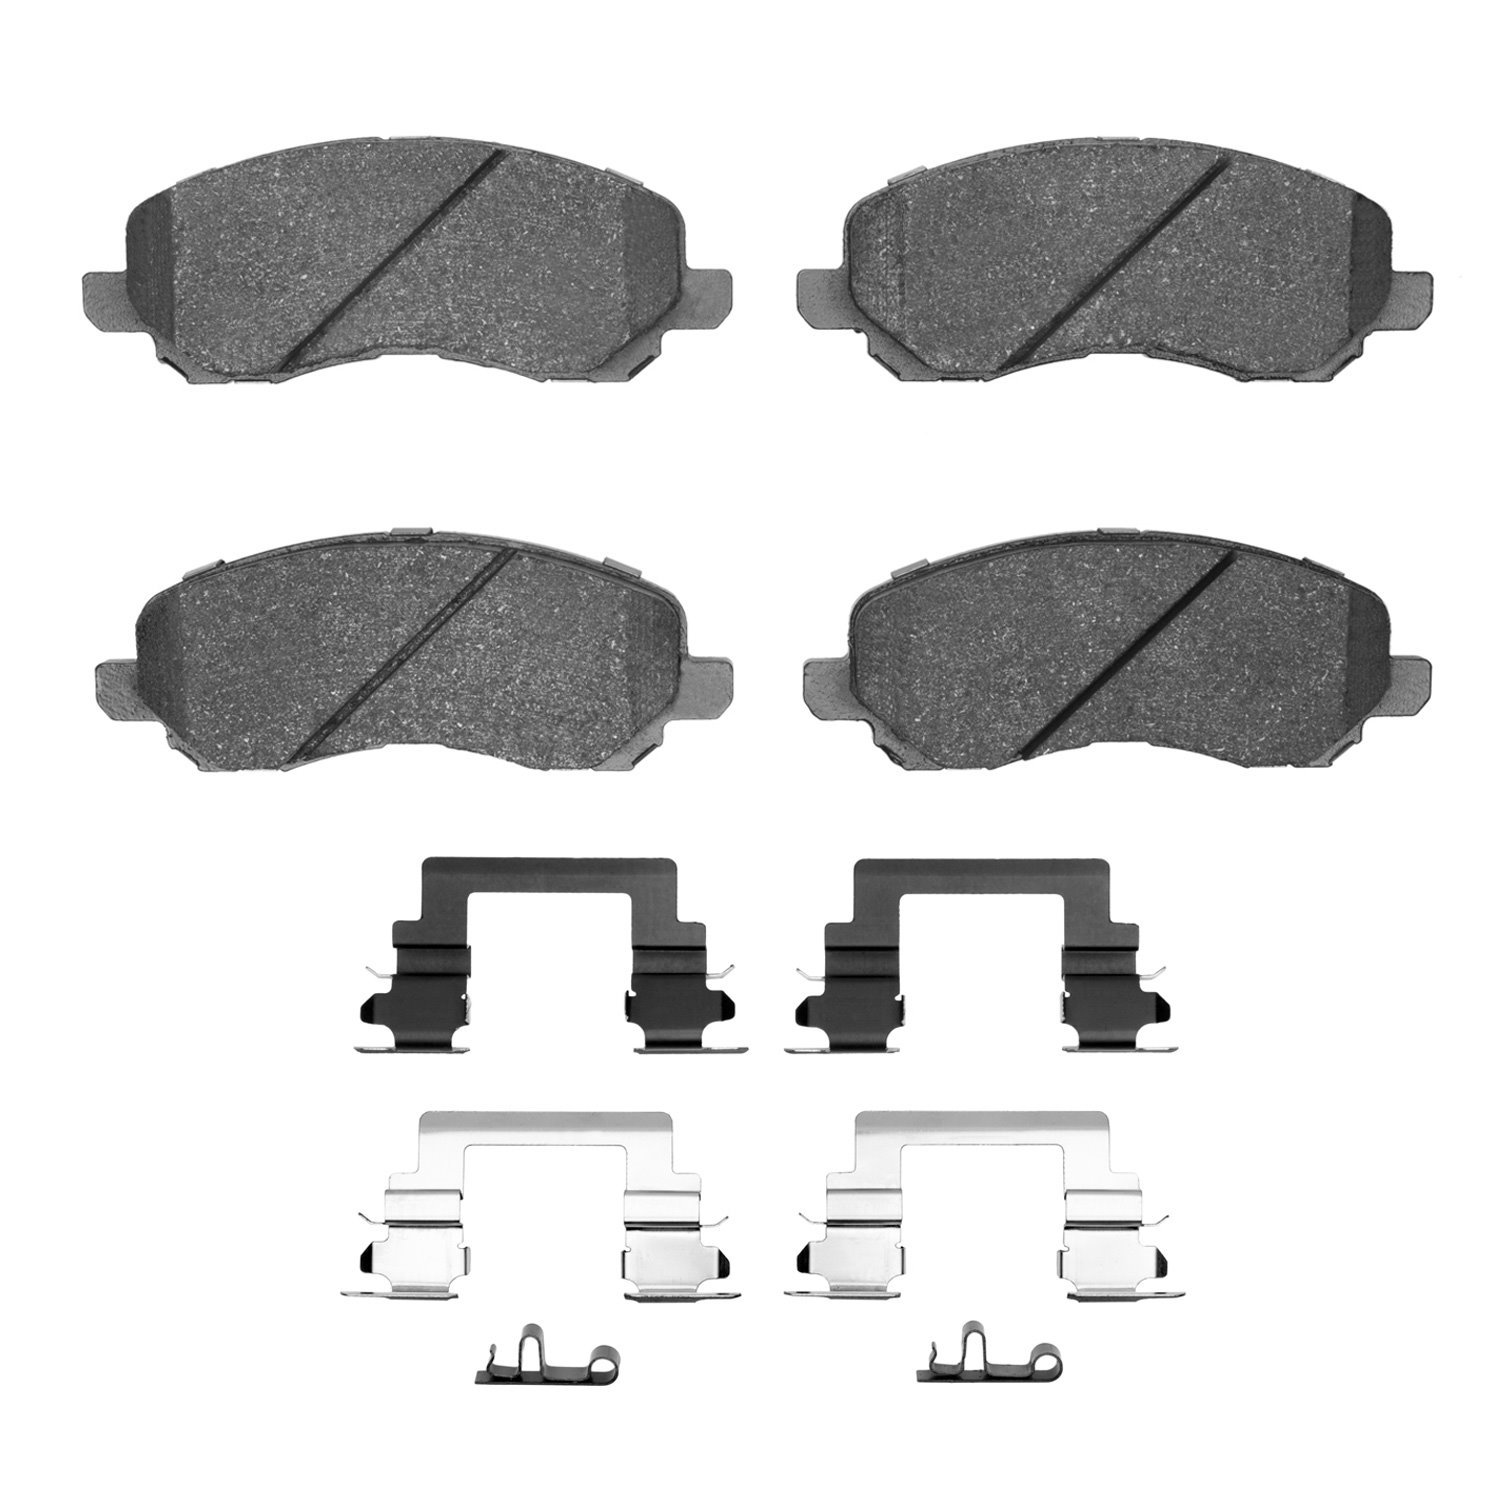 1551-0866-01 5000 Advanced Ceramic Brake Pads & Hardware Kit, Fits Select Multiple Makes/Models, Position: Front